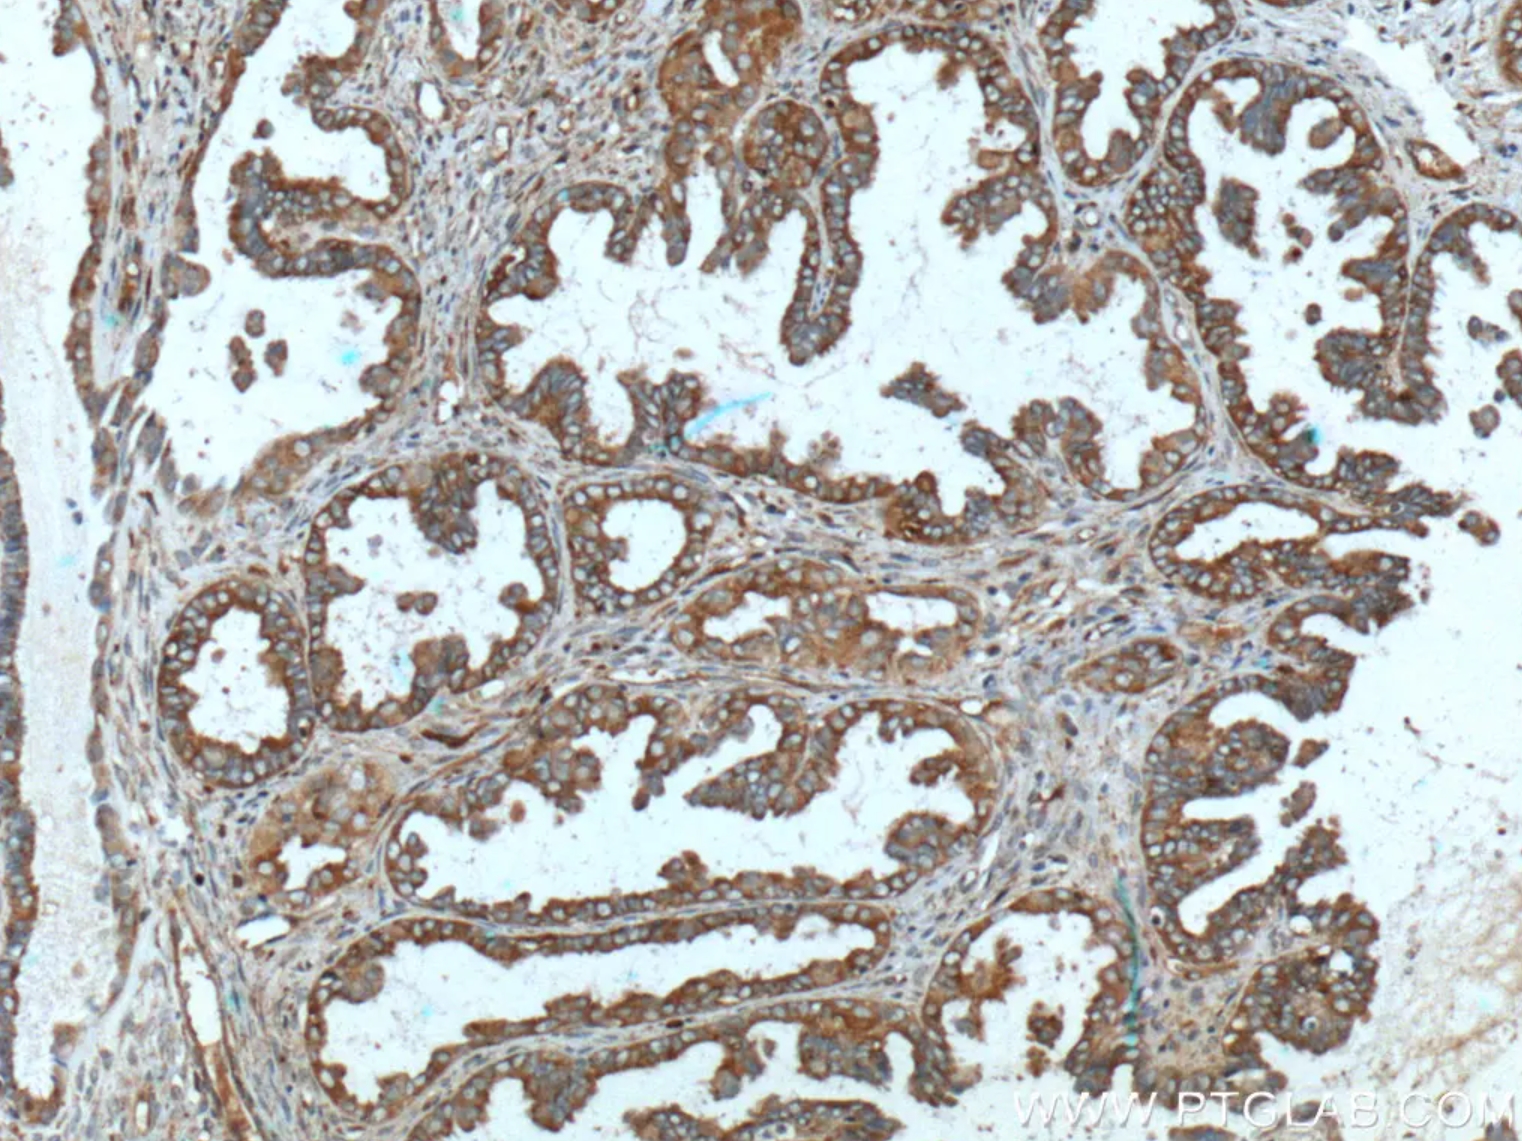 MUC16（CA125）抗体を使用したパラフィン包埋ヒト卵巣腫瘍組織スライドの免疫組織化学染色。